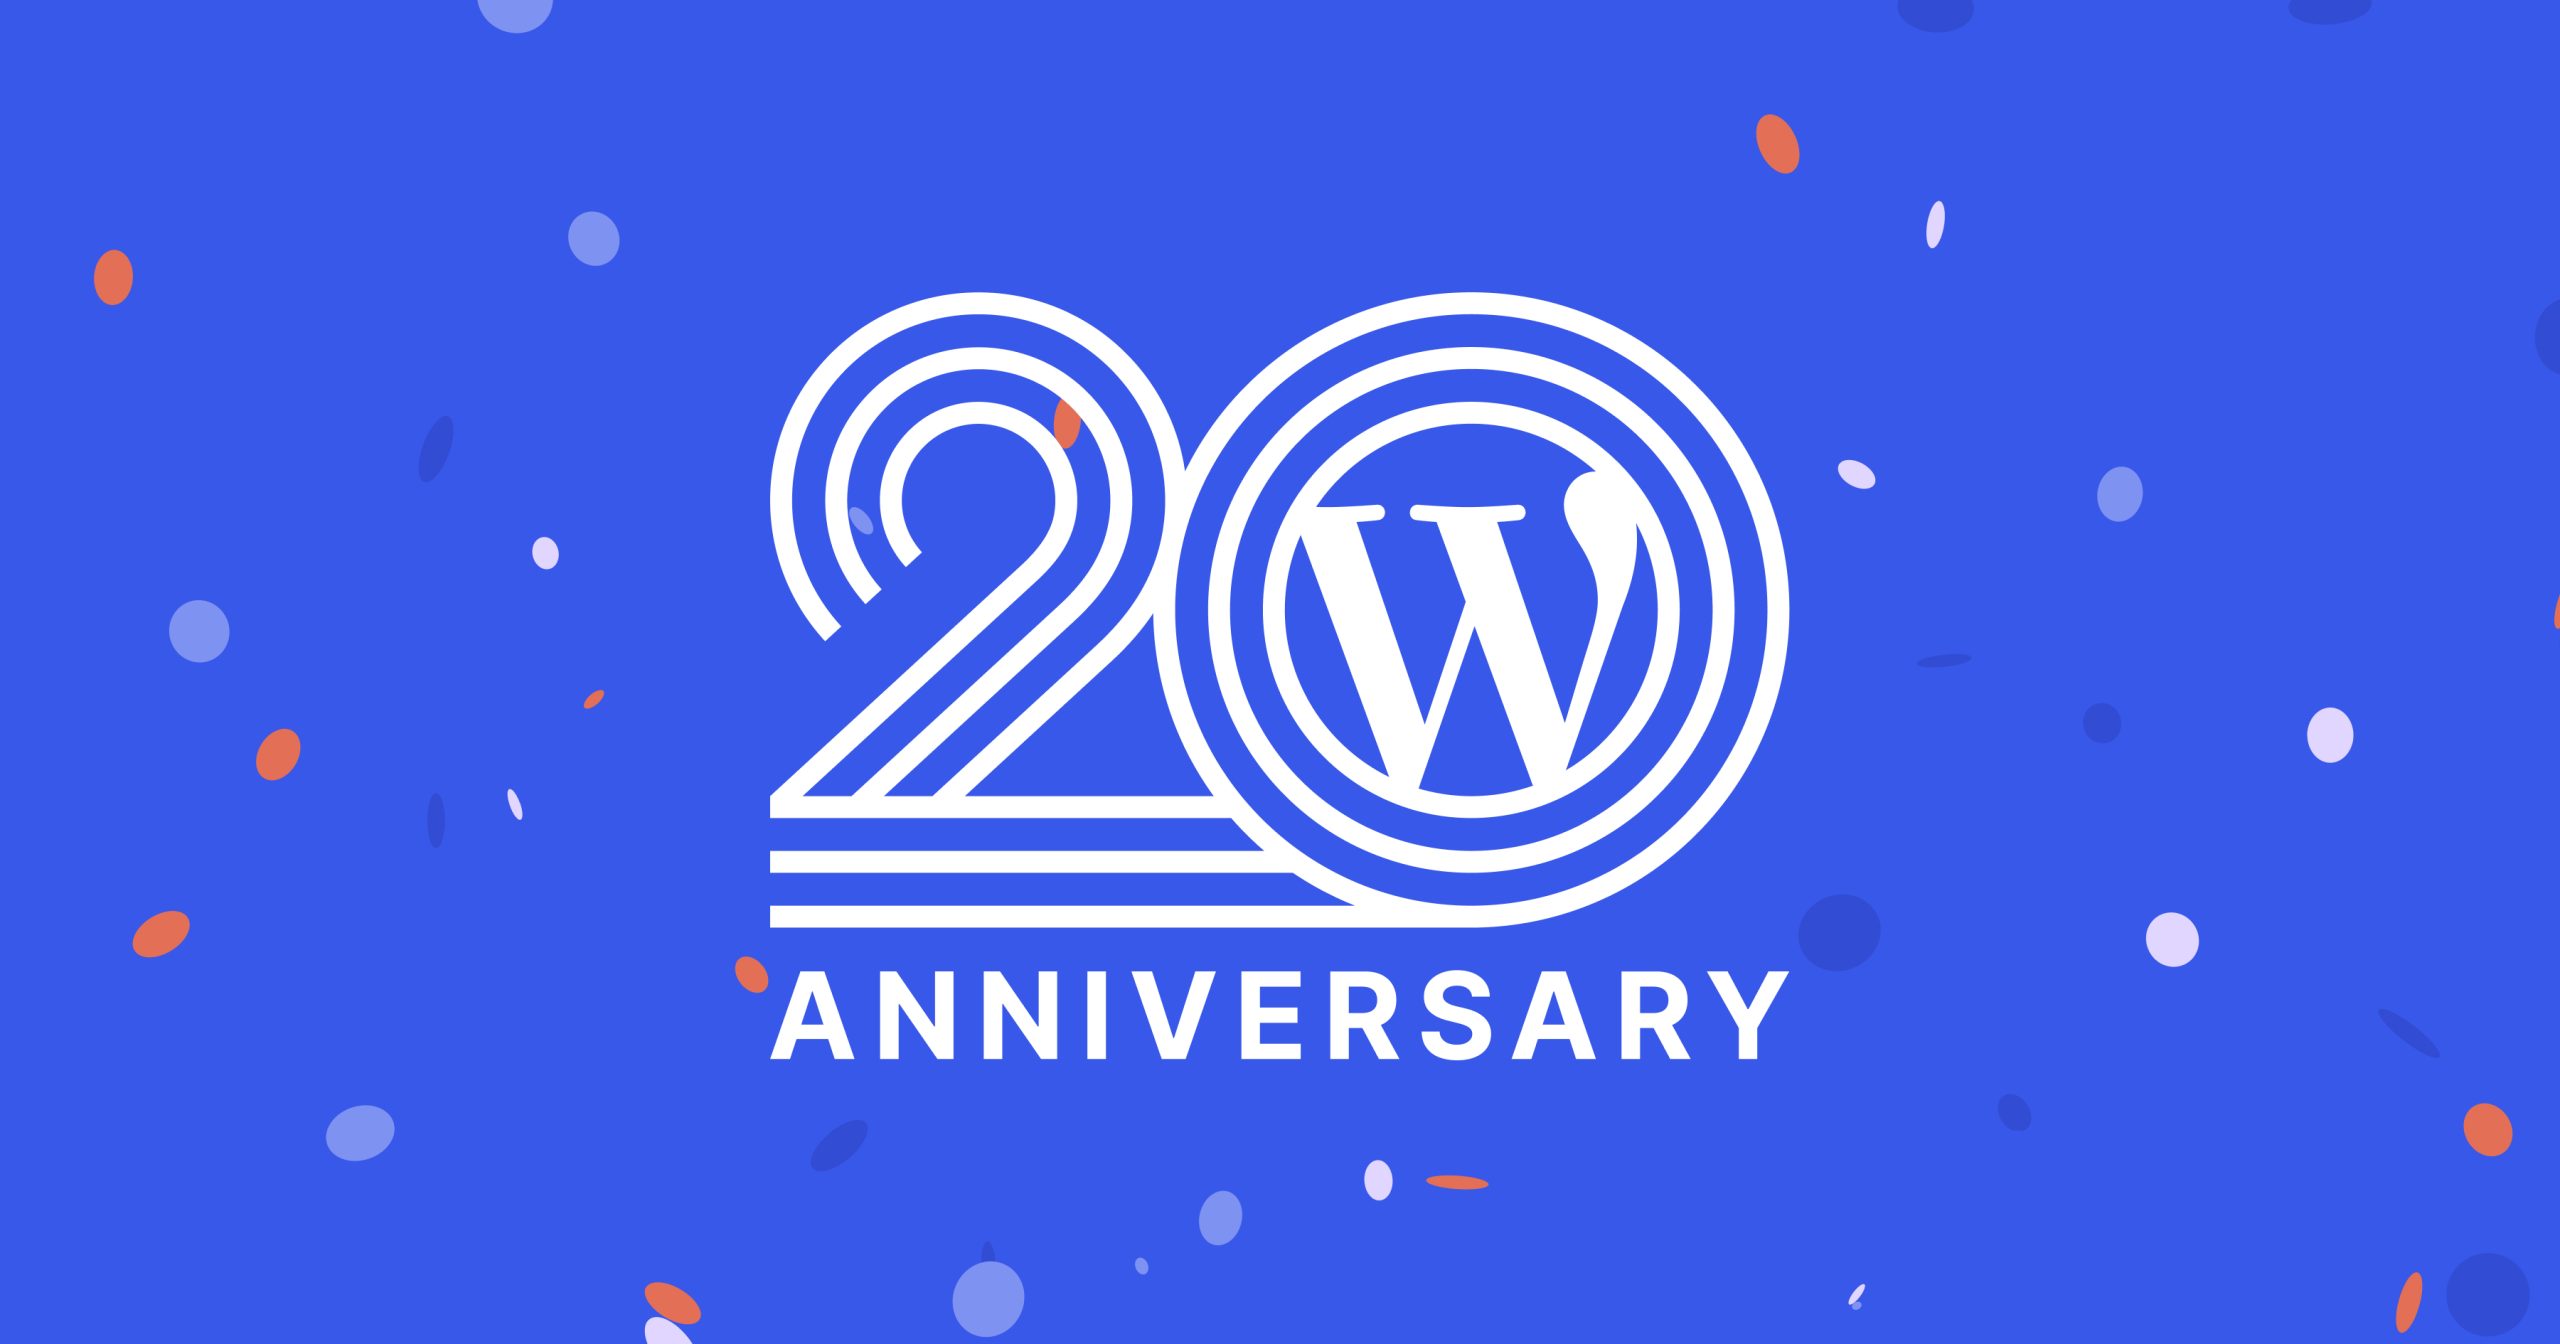 WordPress is Celebrating 20 Years of Empowering the Web